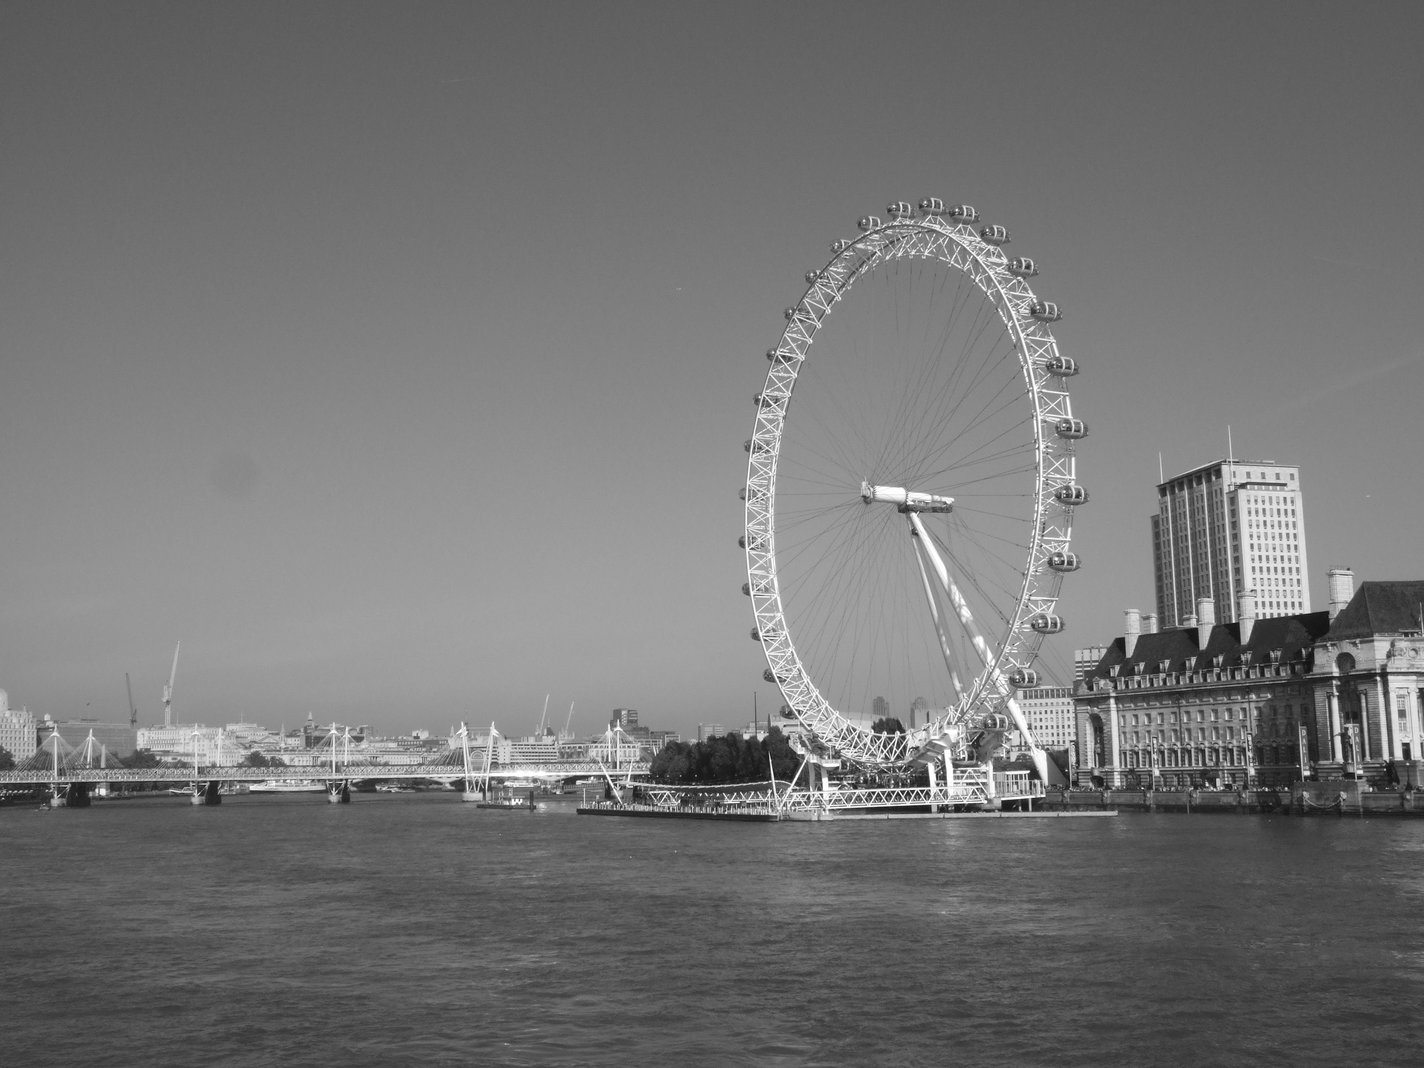 London Eye - Architecture, London | Eye | Ferris Wheel | Architecture | Entertainment | Thames | River